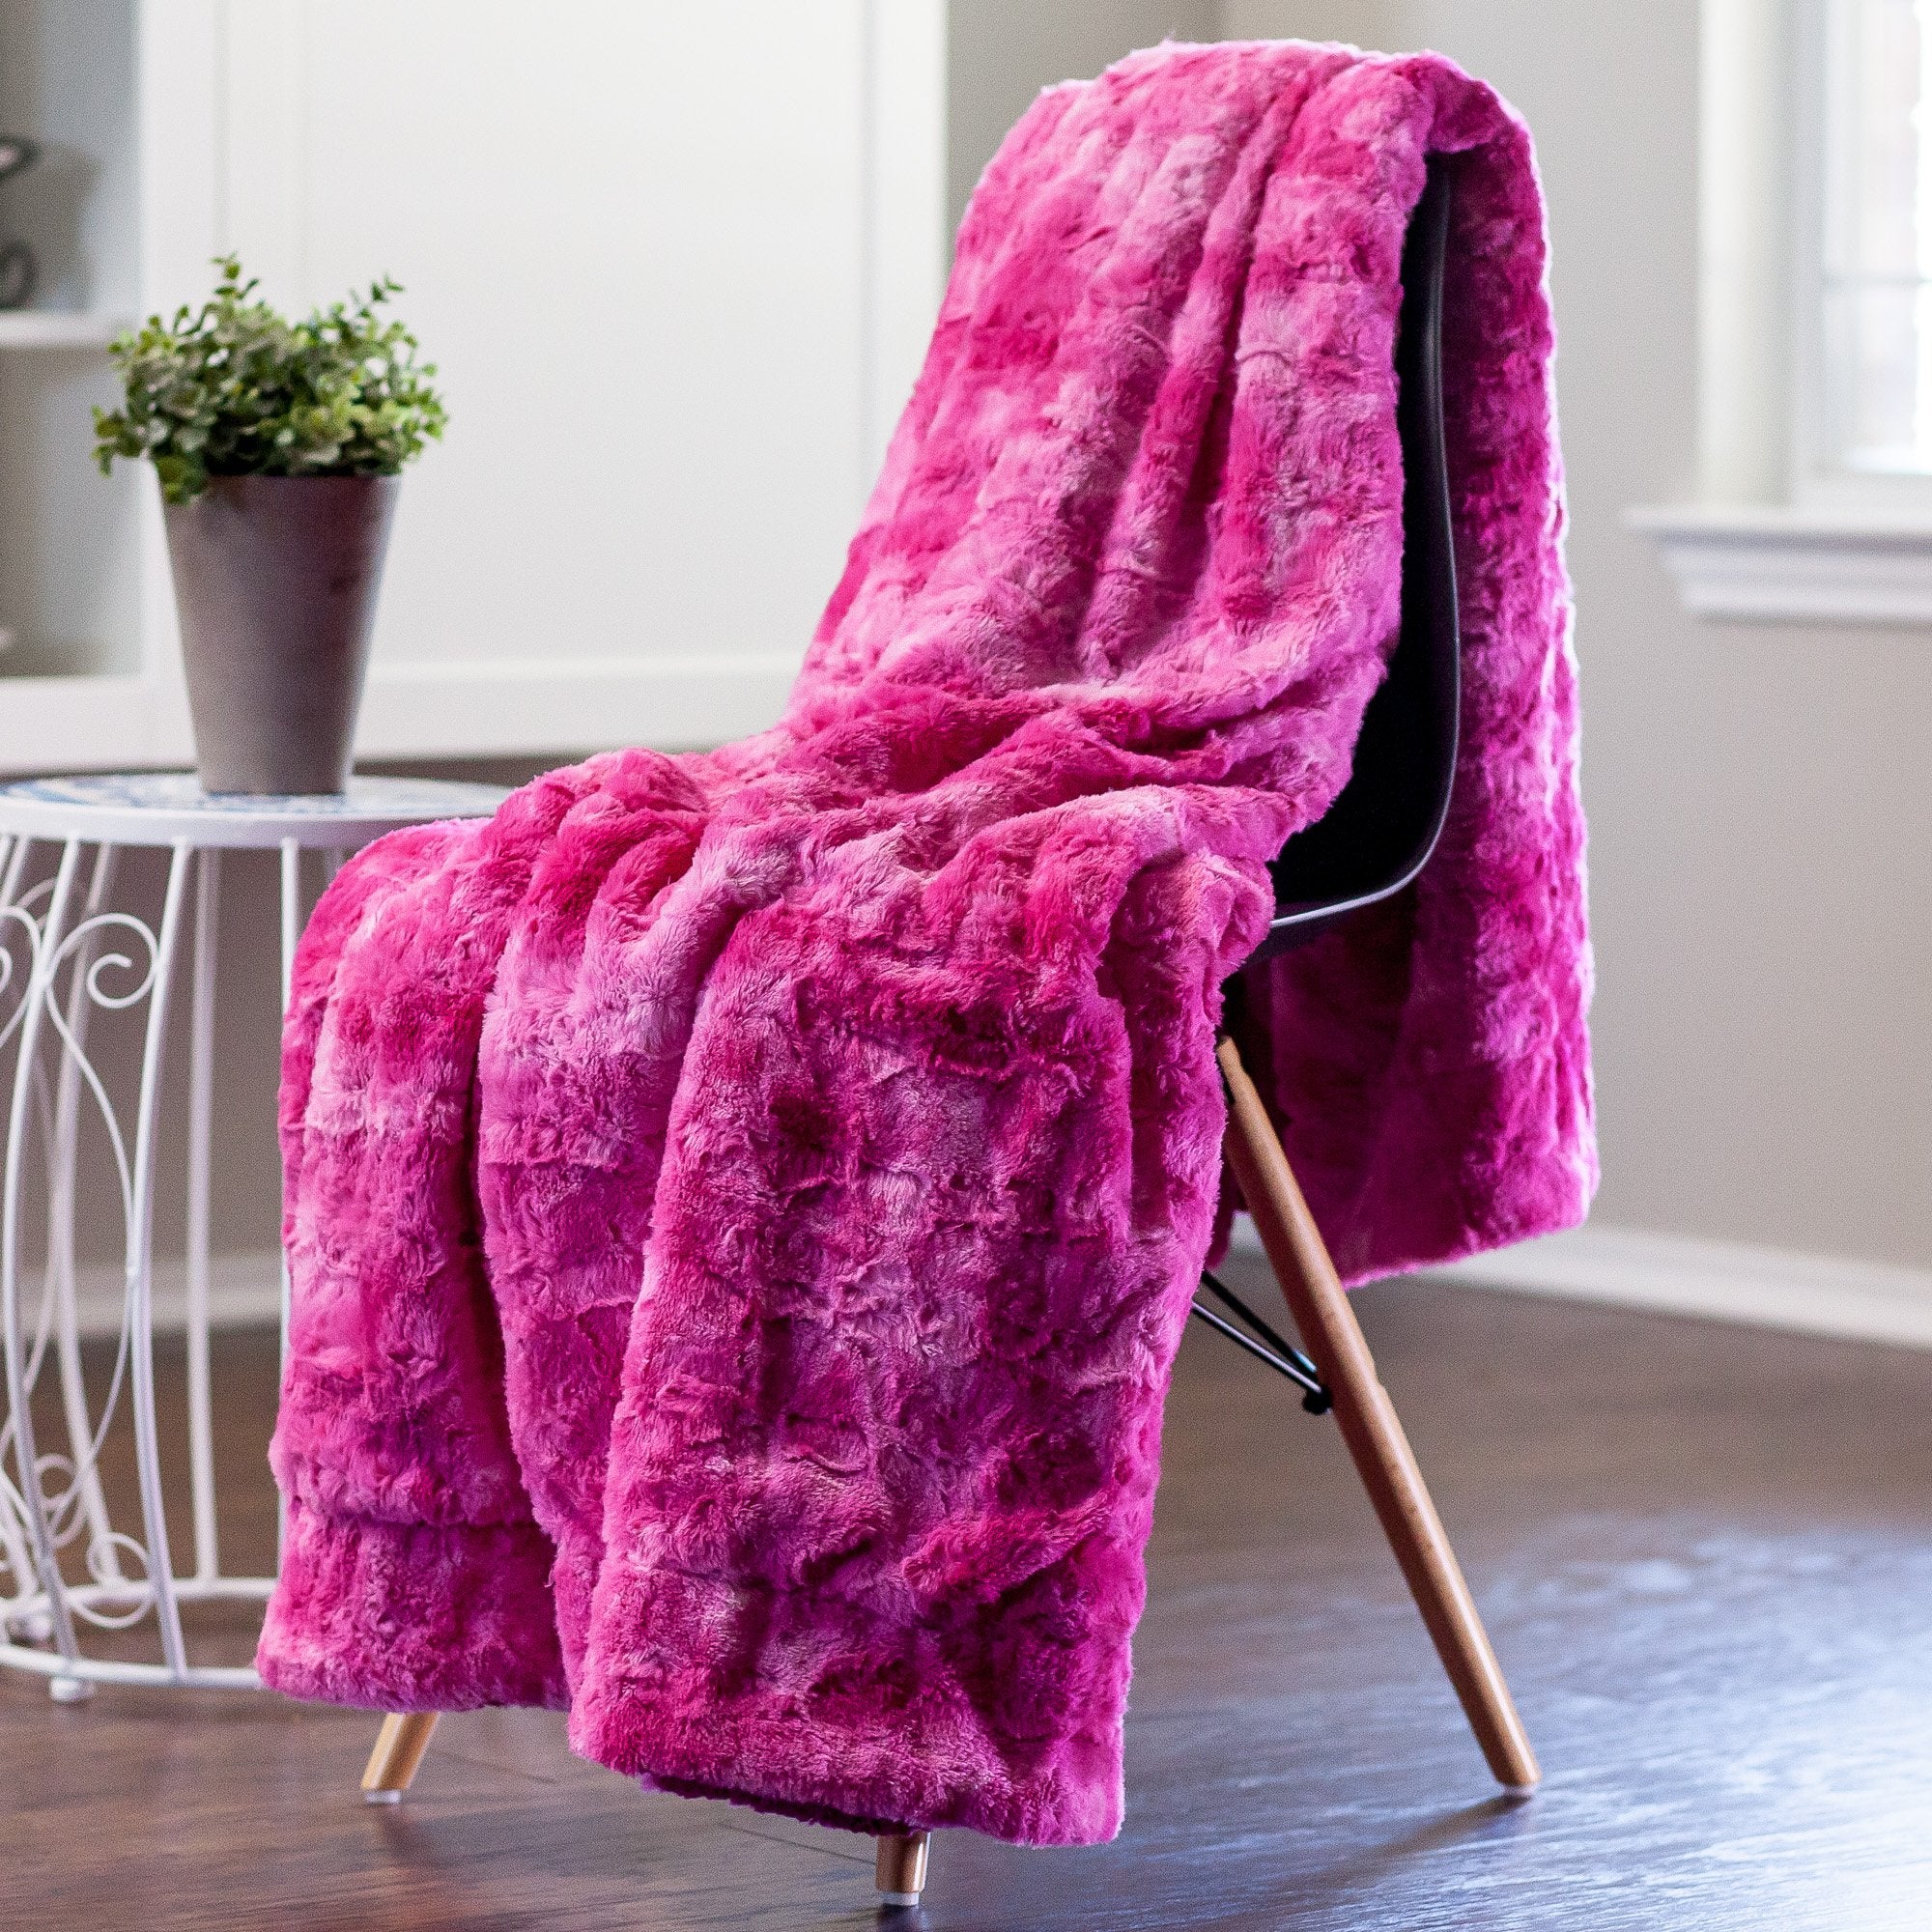 8 Mo Finance Chanasya Fuzzy Faux Fur Throw Blanket Light Weight Abunda